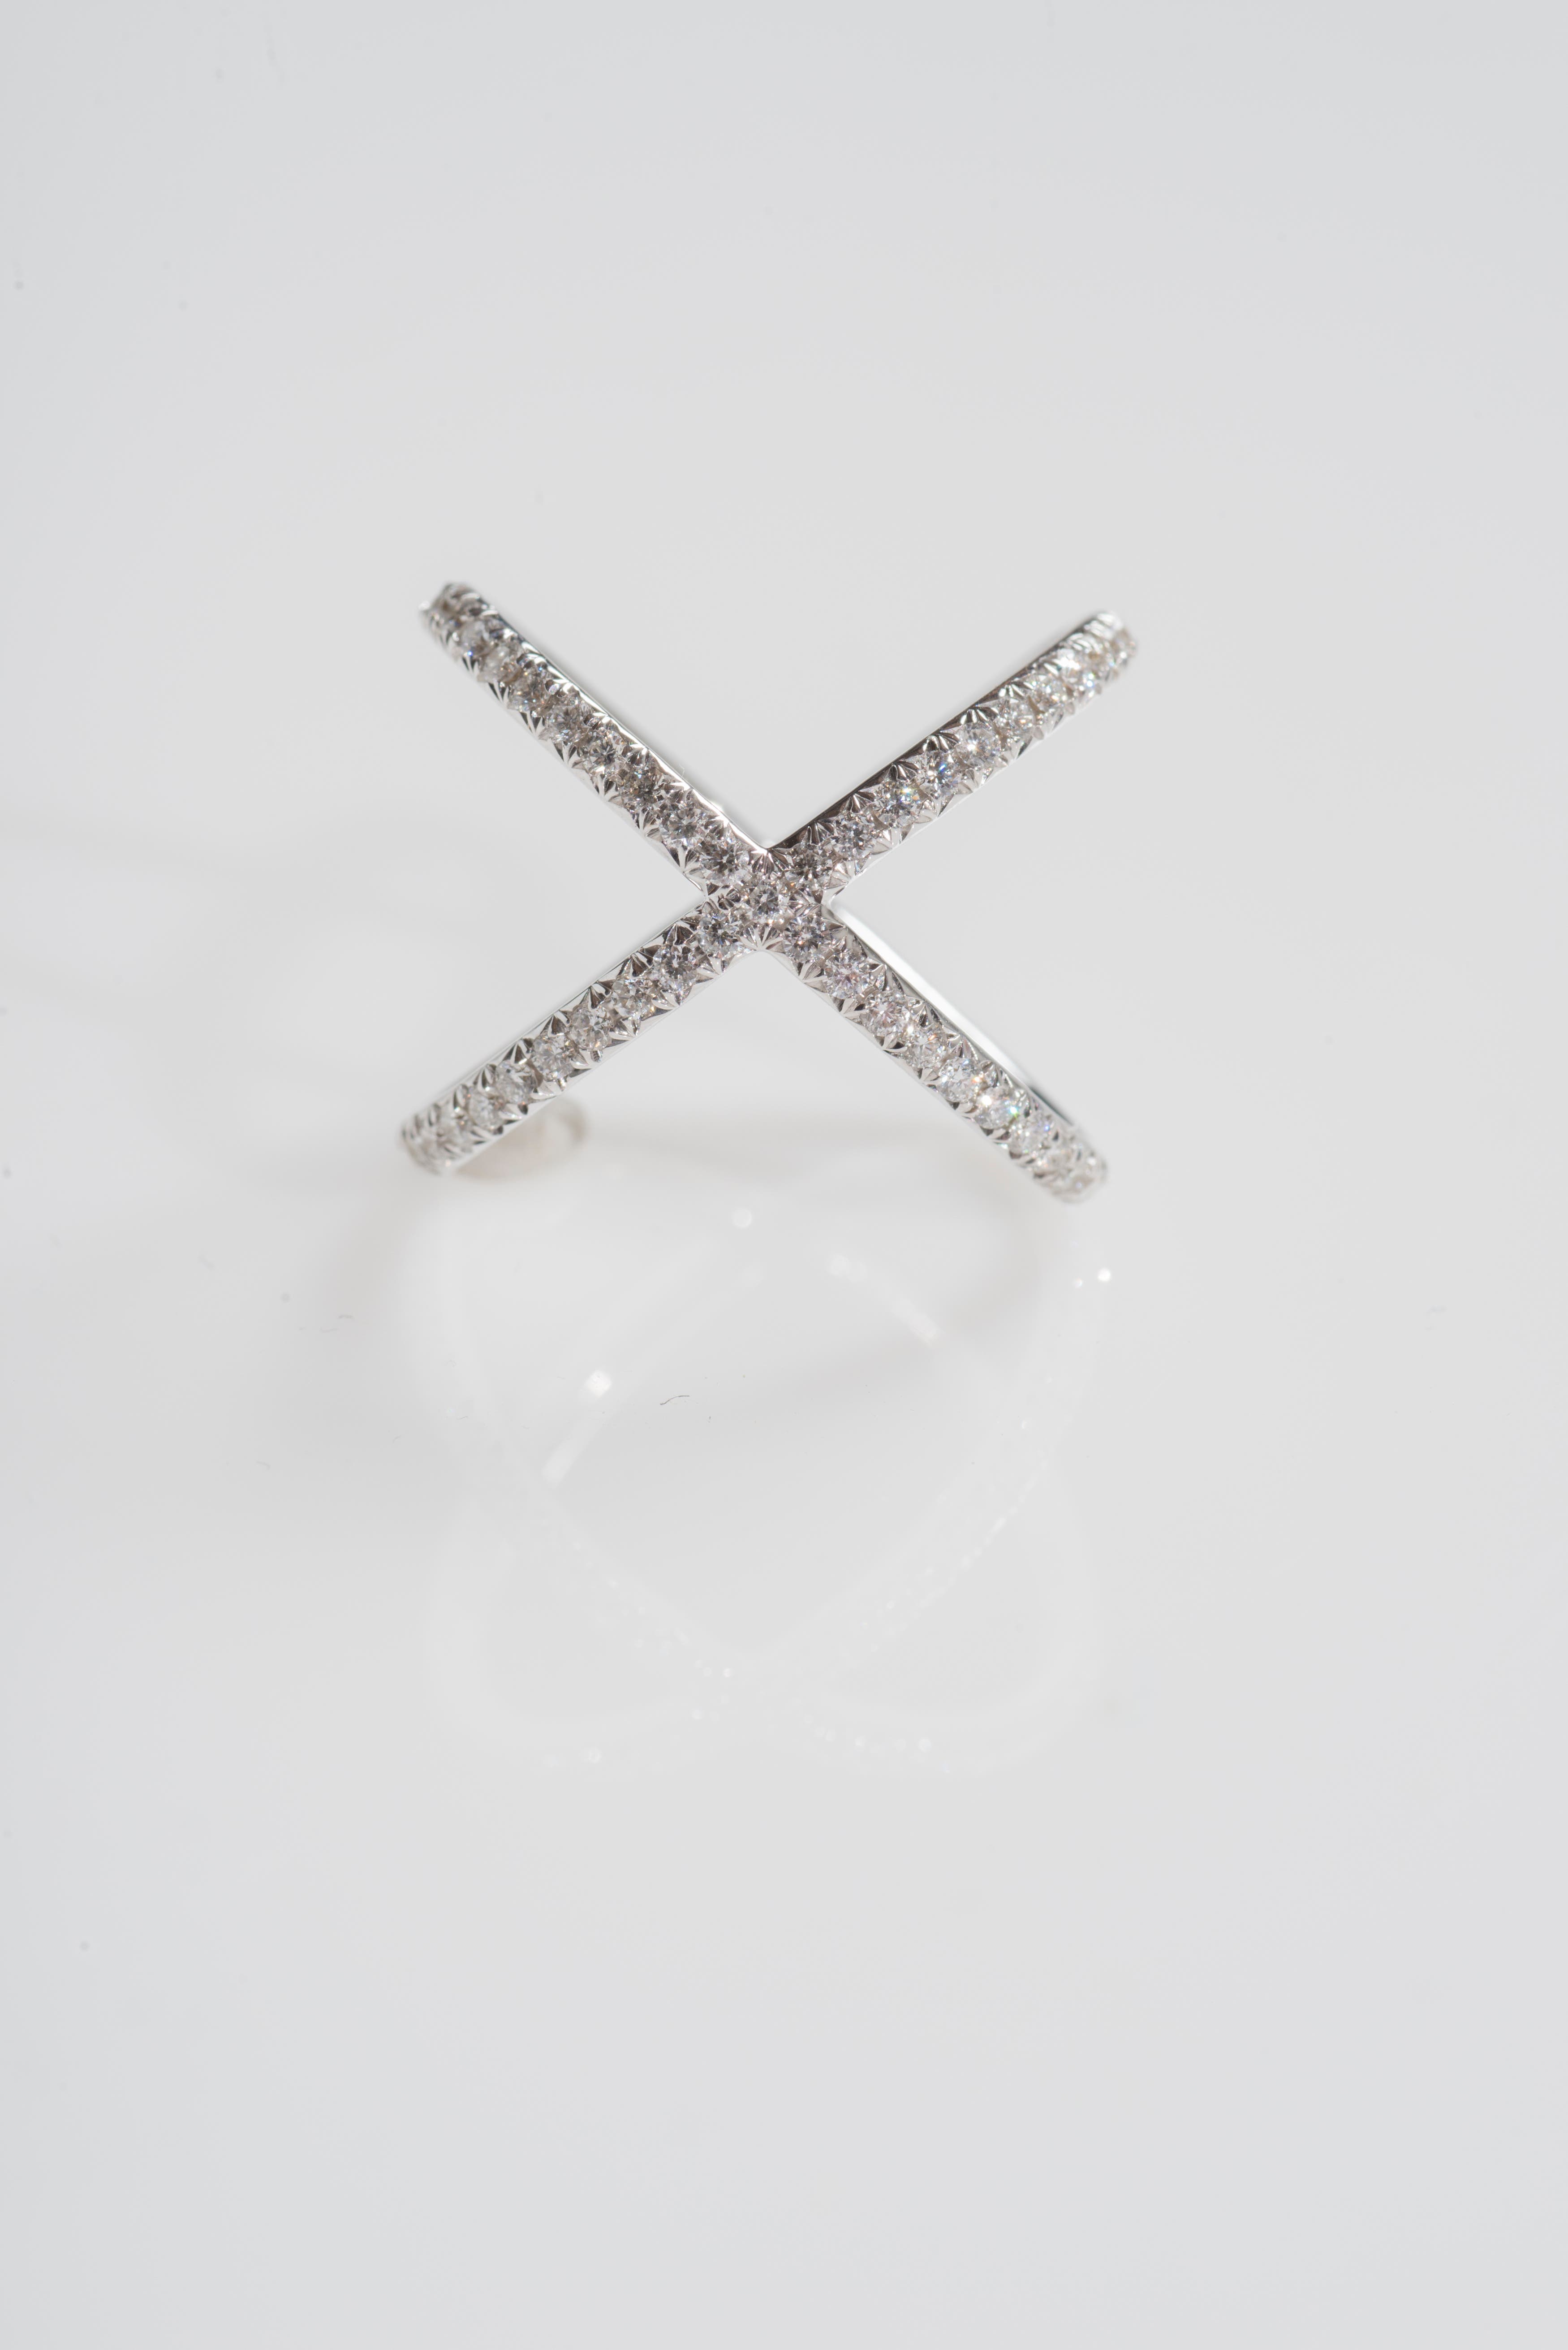 X Ring with Diamonds image 2